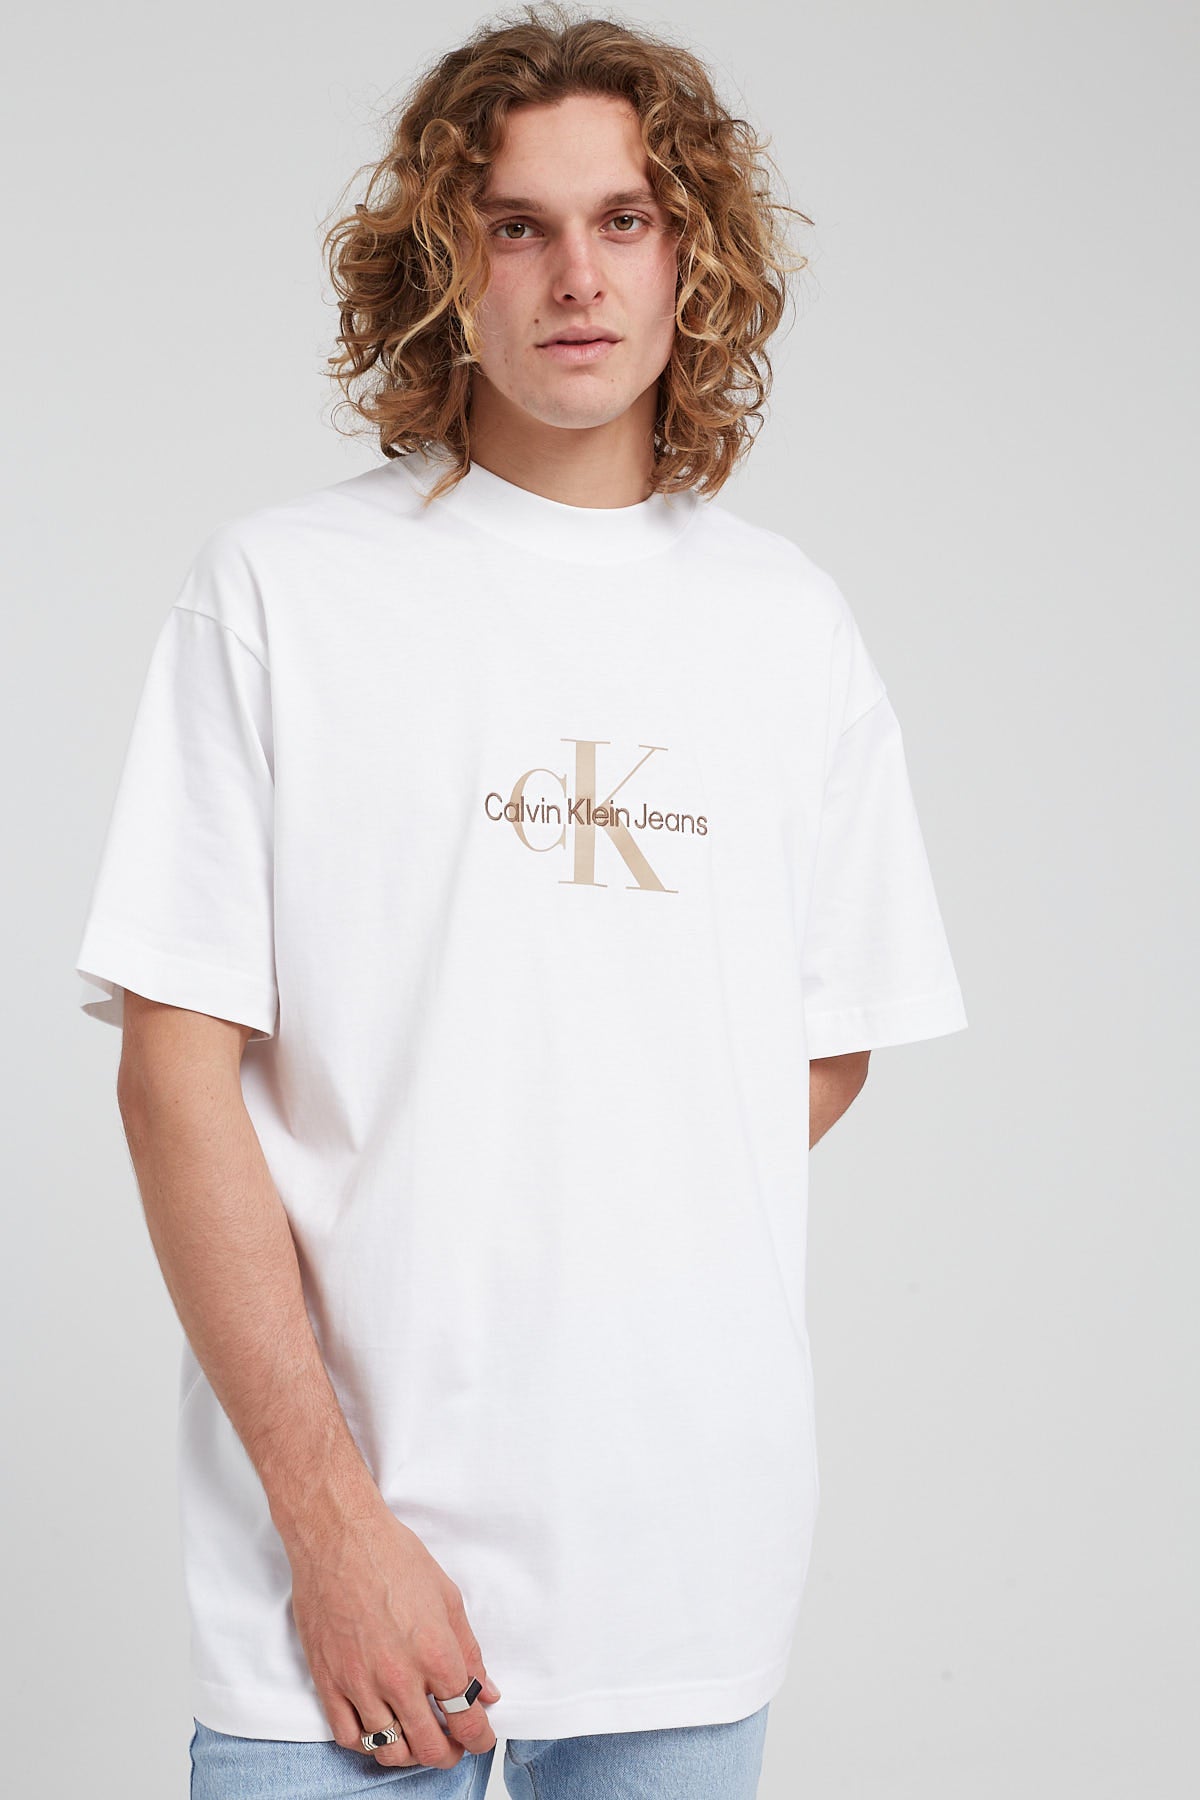 Store Klein – Bright White Tee Universal CK Monogram Calvin